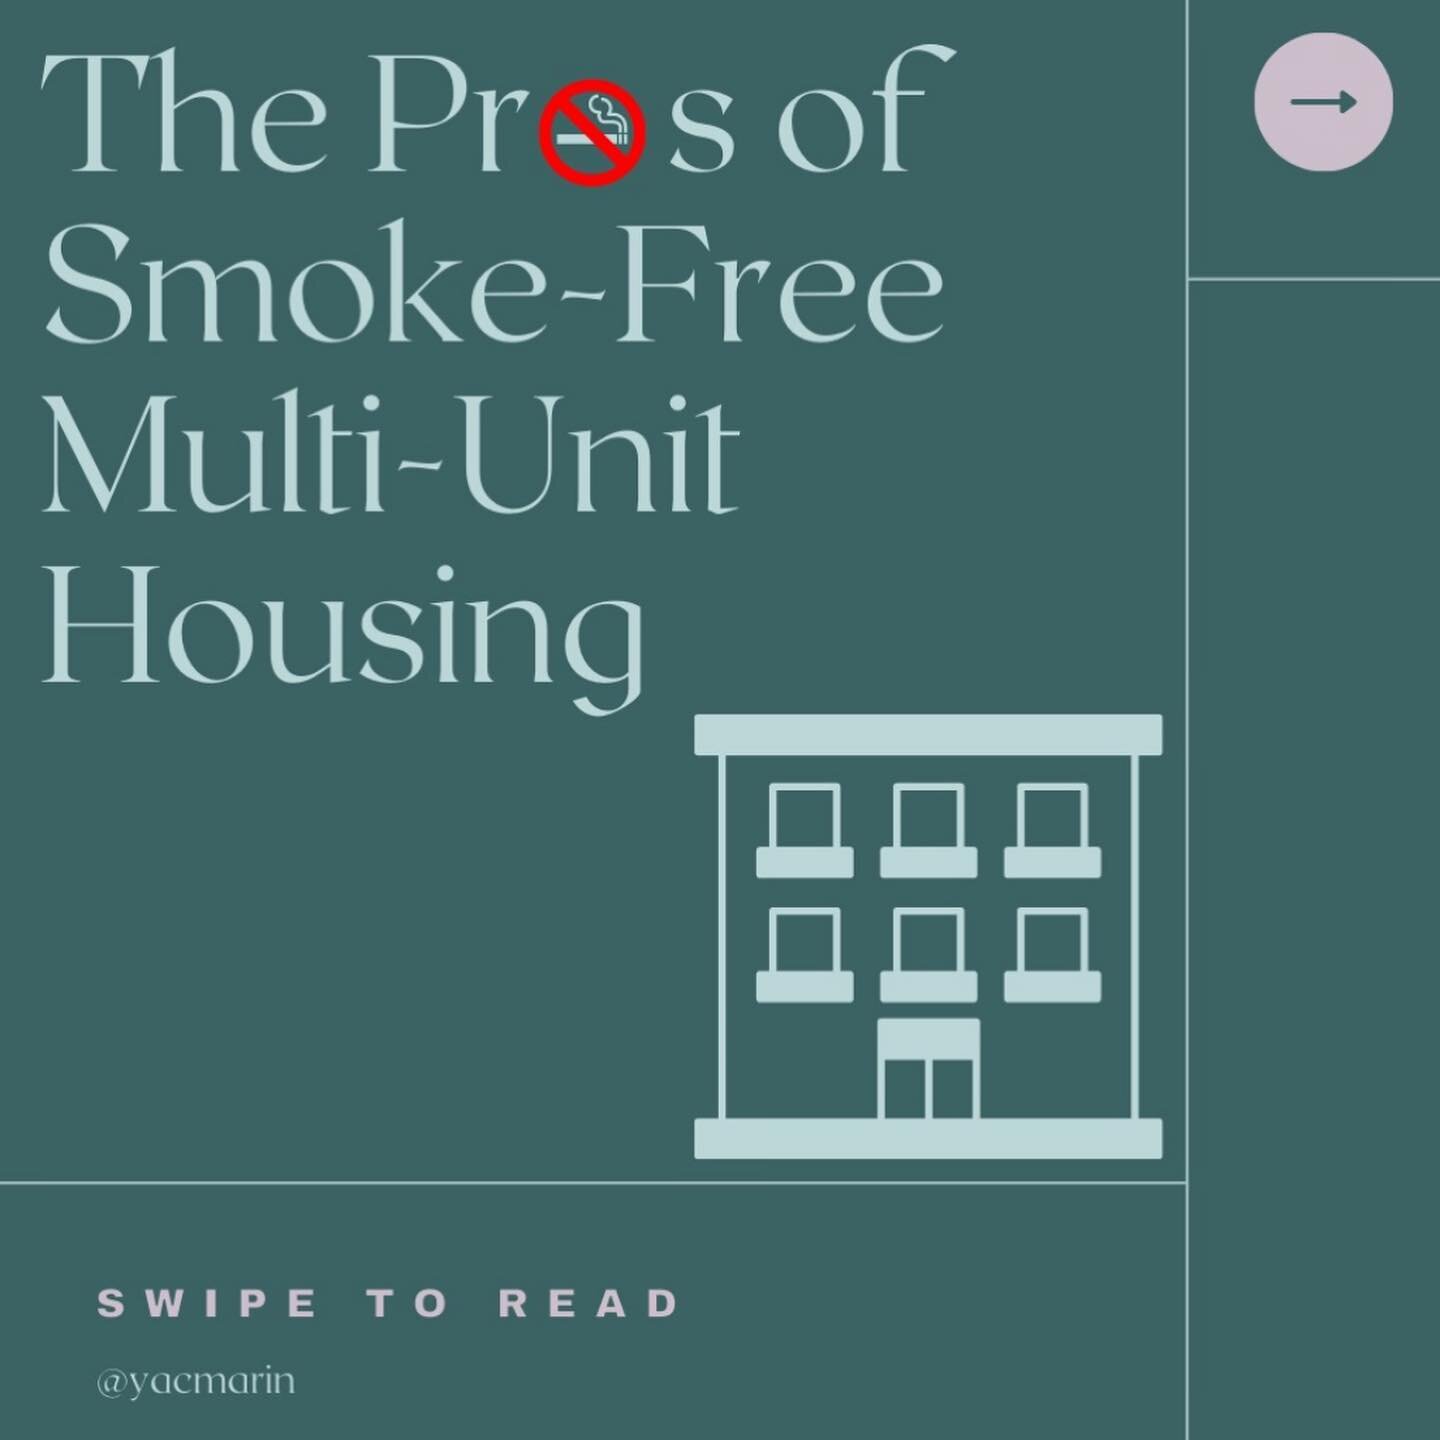 Swipe to learn about smoke-free multi-unit housing #yacmarin #secondhandsmoke #multiunithousing #donttaketherisk